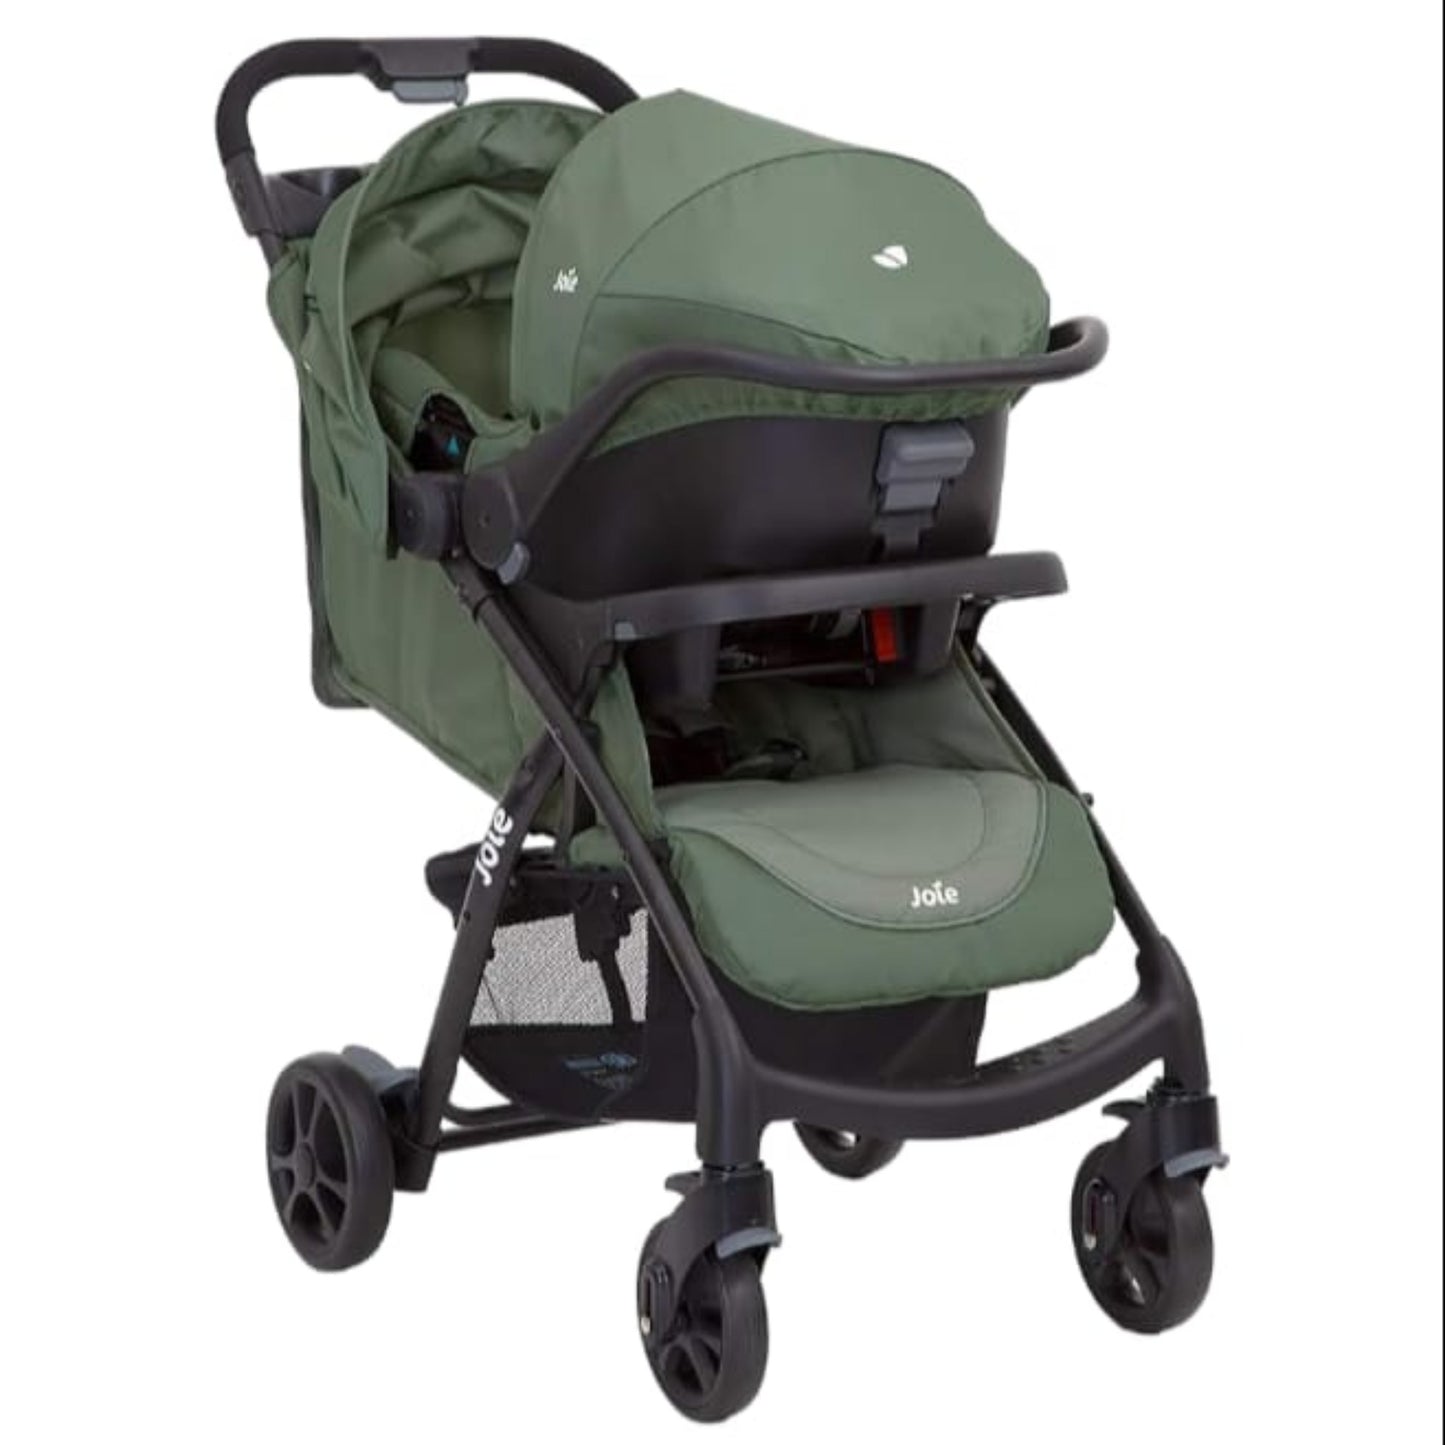 Joie Muze travel system baby Stroller for babies with car seat عربة اطفال ميوز ترافيل سيستم من جوي للاطفال